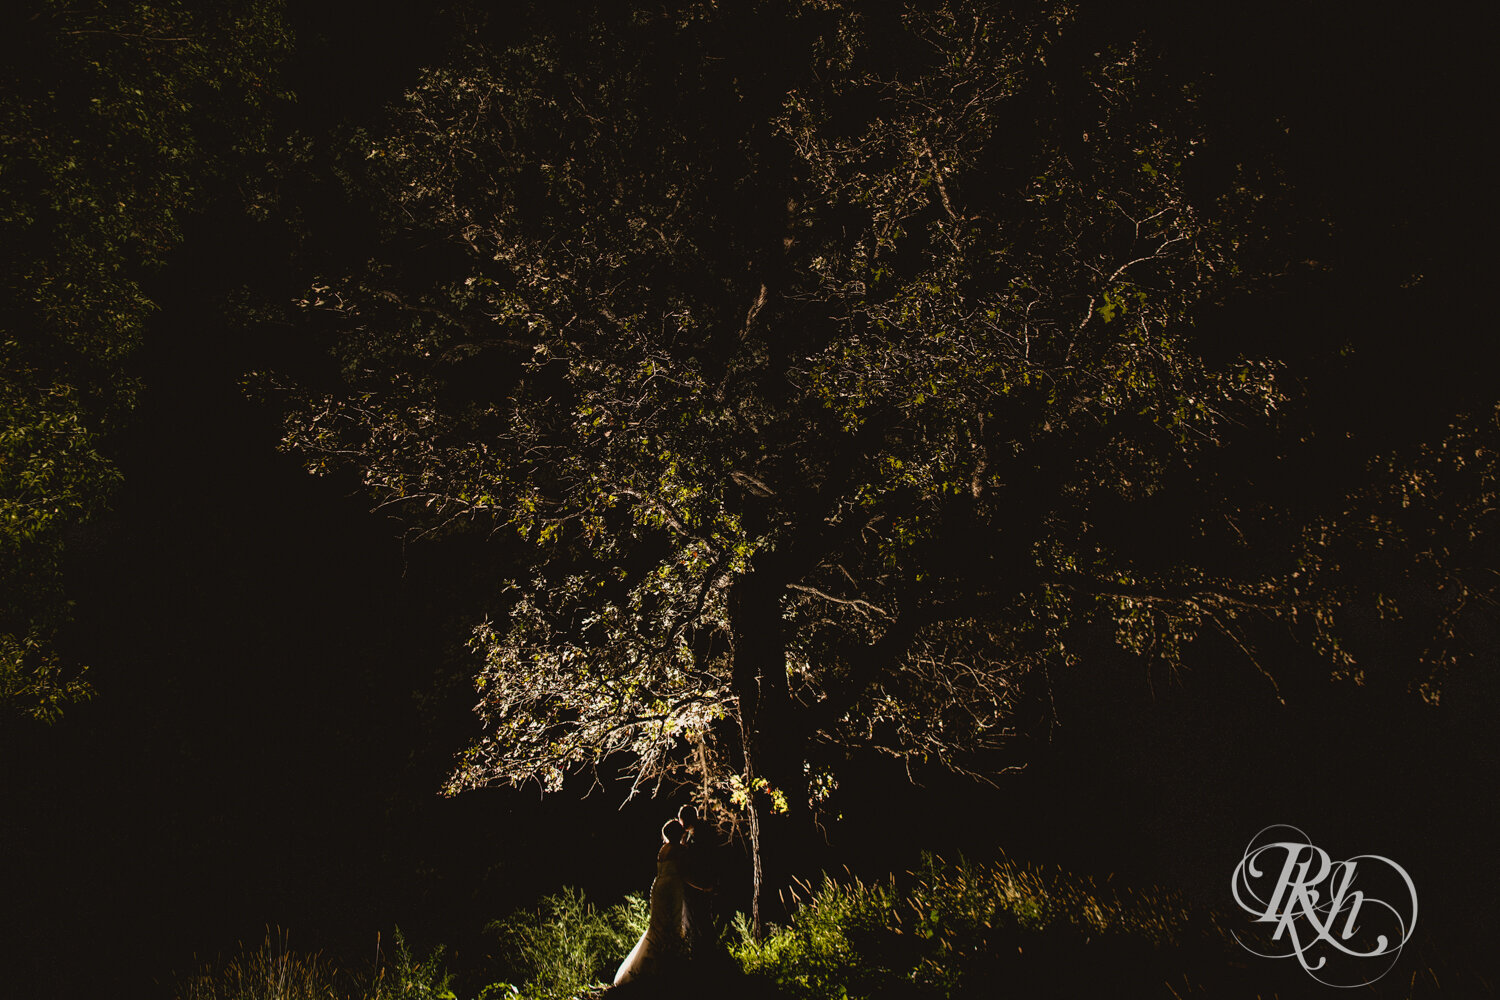 Bride and groom kiss under a tree at night at Eagan Community Center in Eagan, Minnesota.